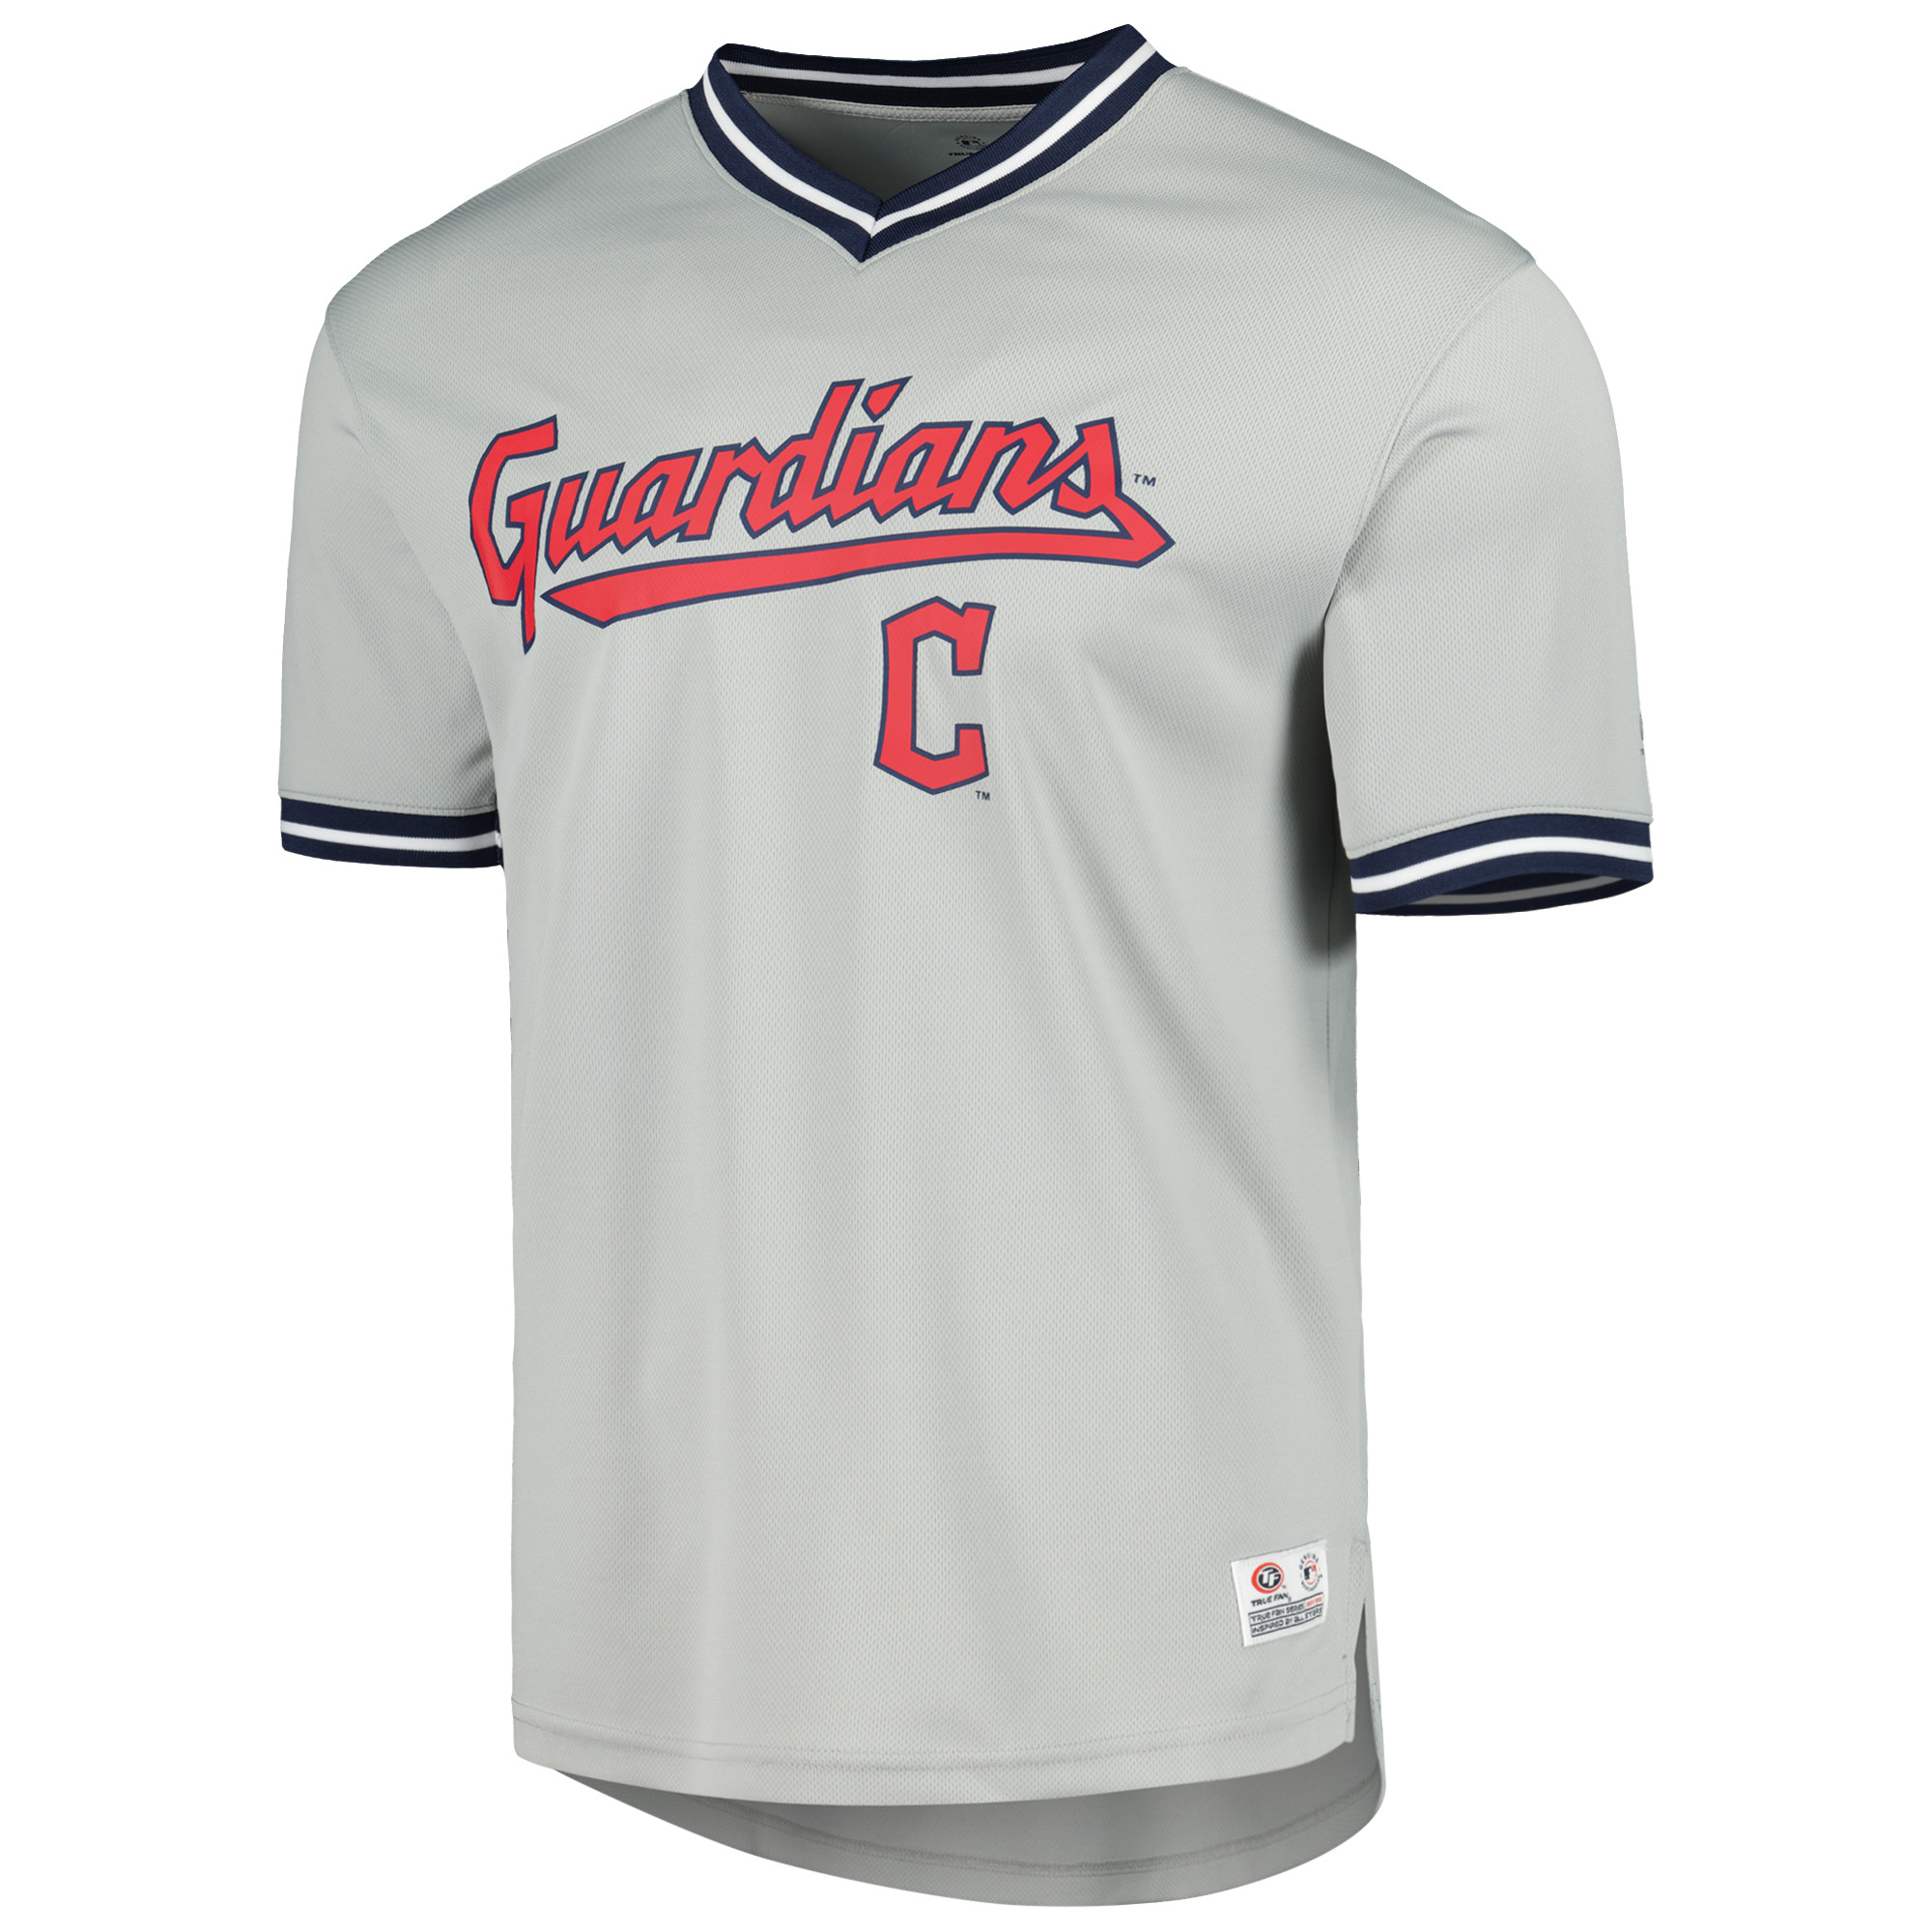 Cleveland Guardians Baseball Jerseys, Guardians Jerseys, Authentic